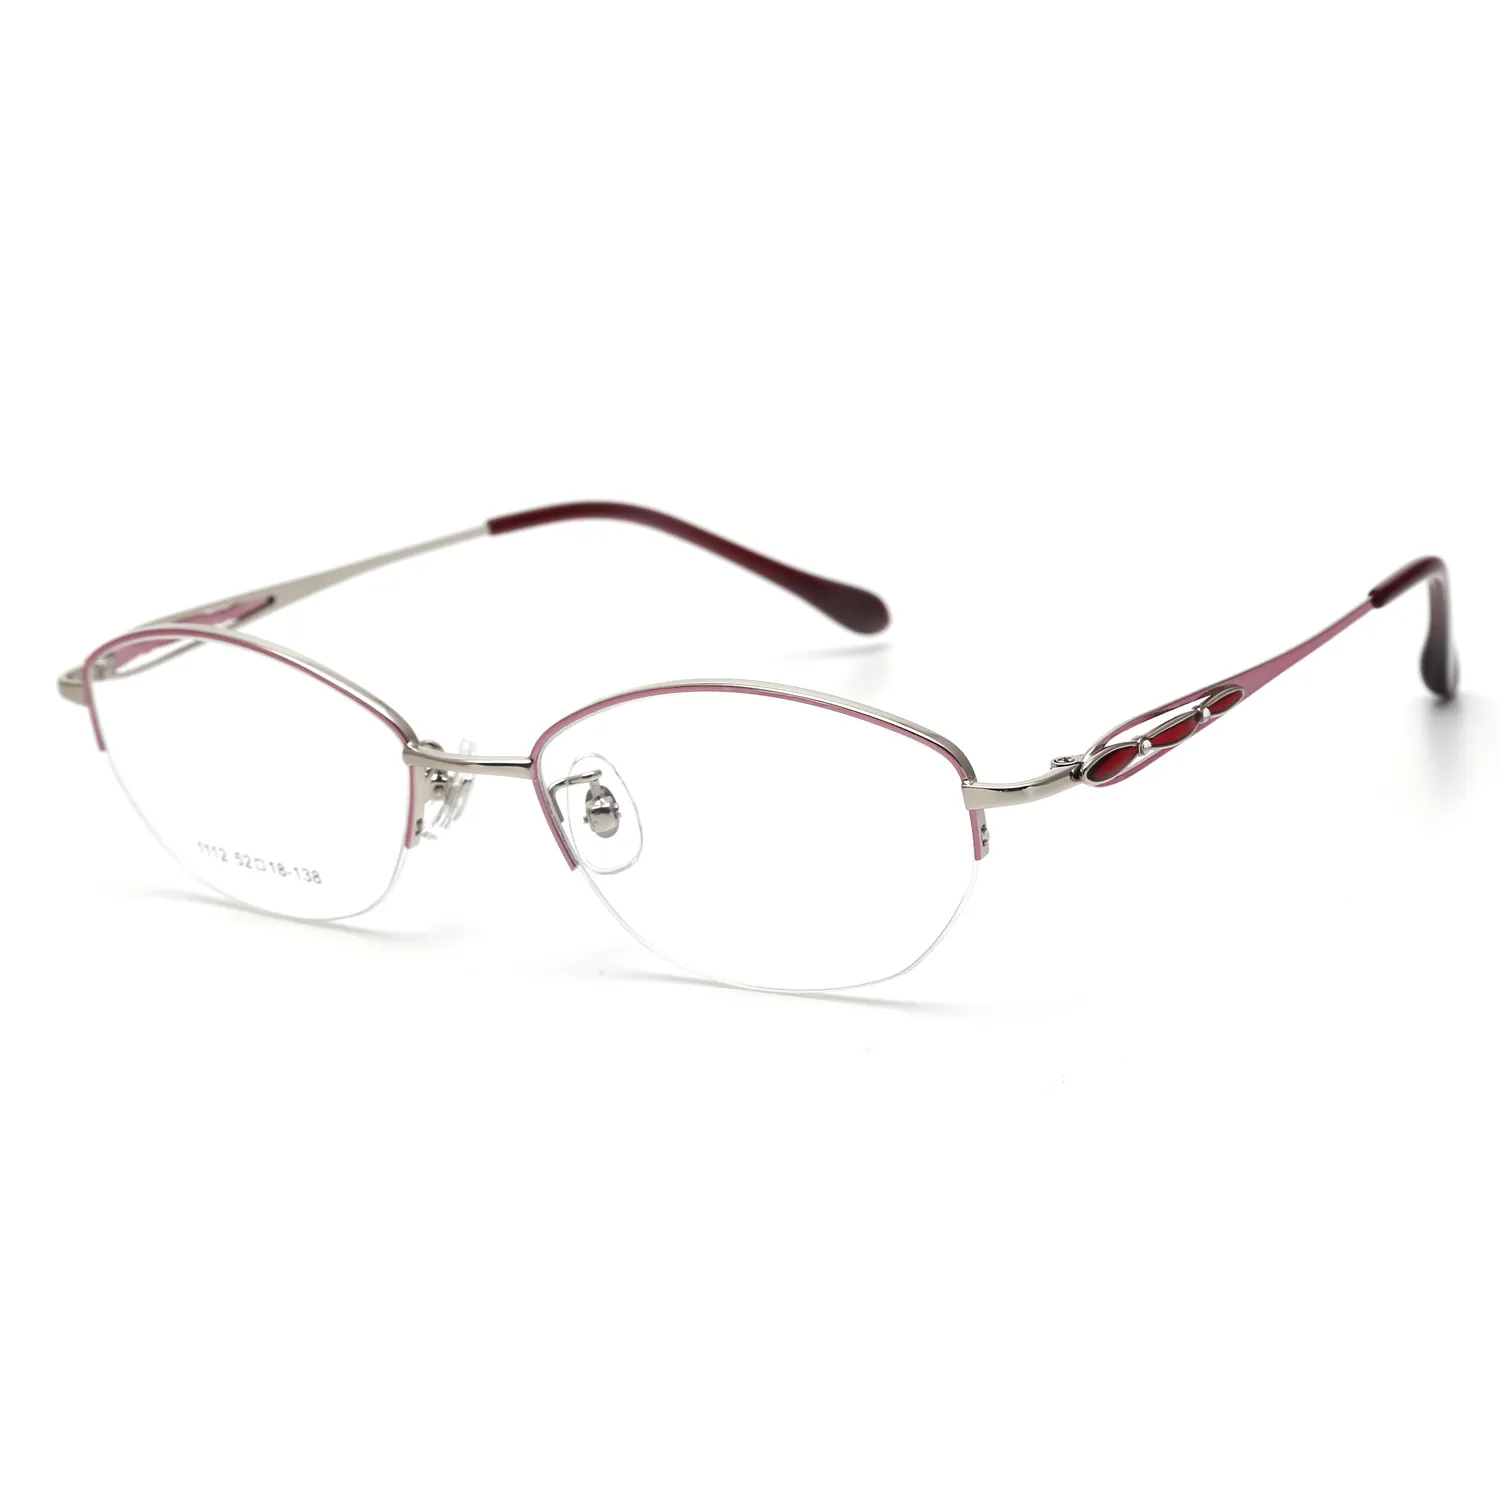 Fashion Eyewear Classic Metal Frame Eyeglasses Men Or Women Glasses Round And Square Shape Optical Frame In Stock